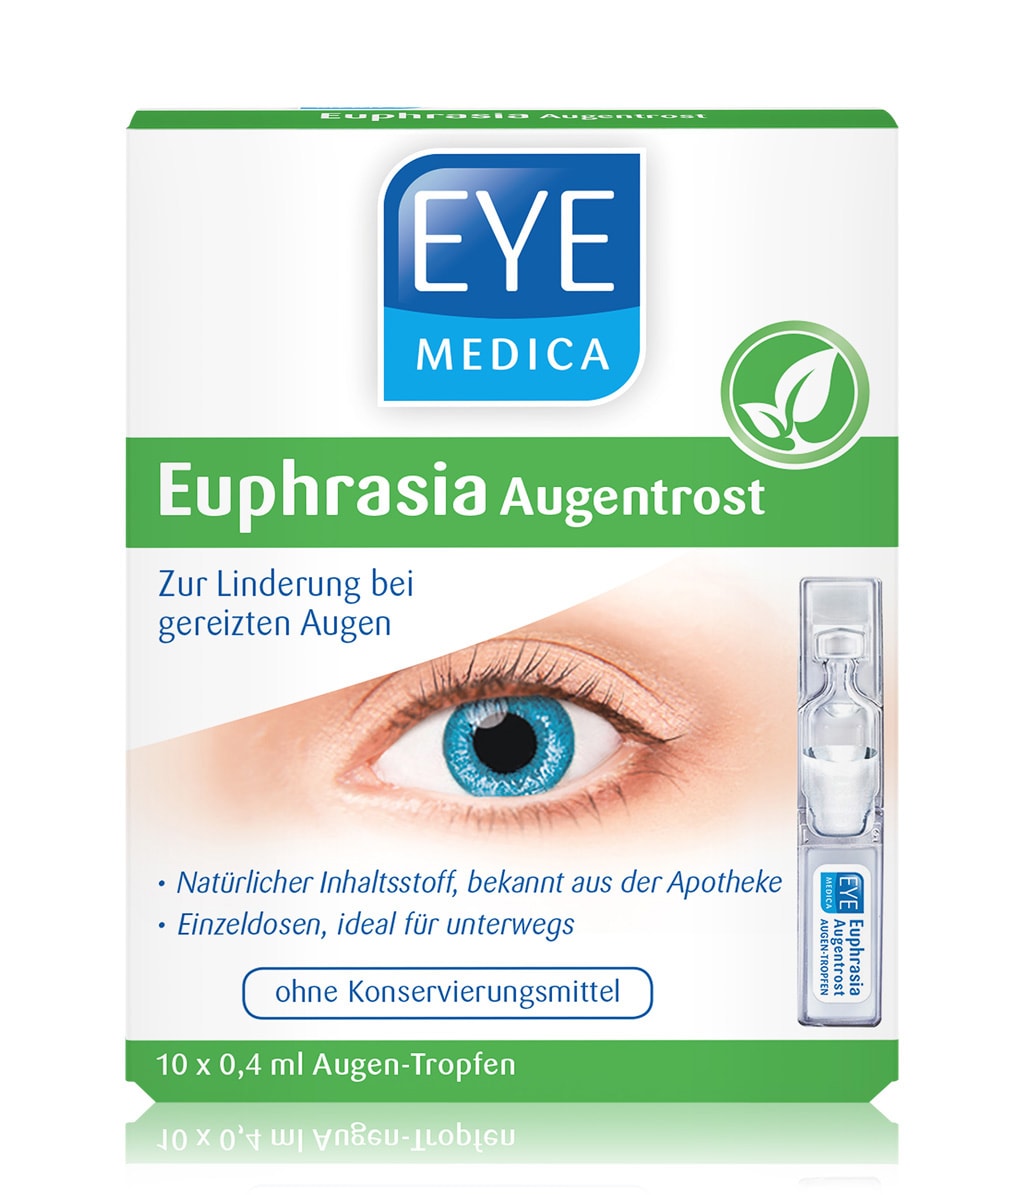 EyeMedica Euphrasia Augentrost Augentropfen bestellen flaconi